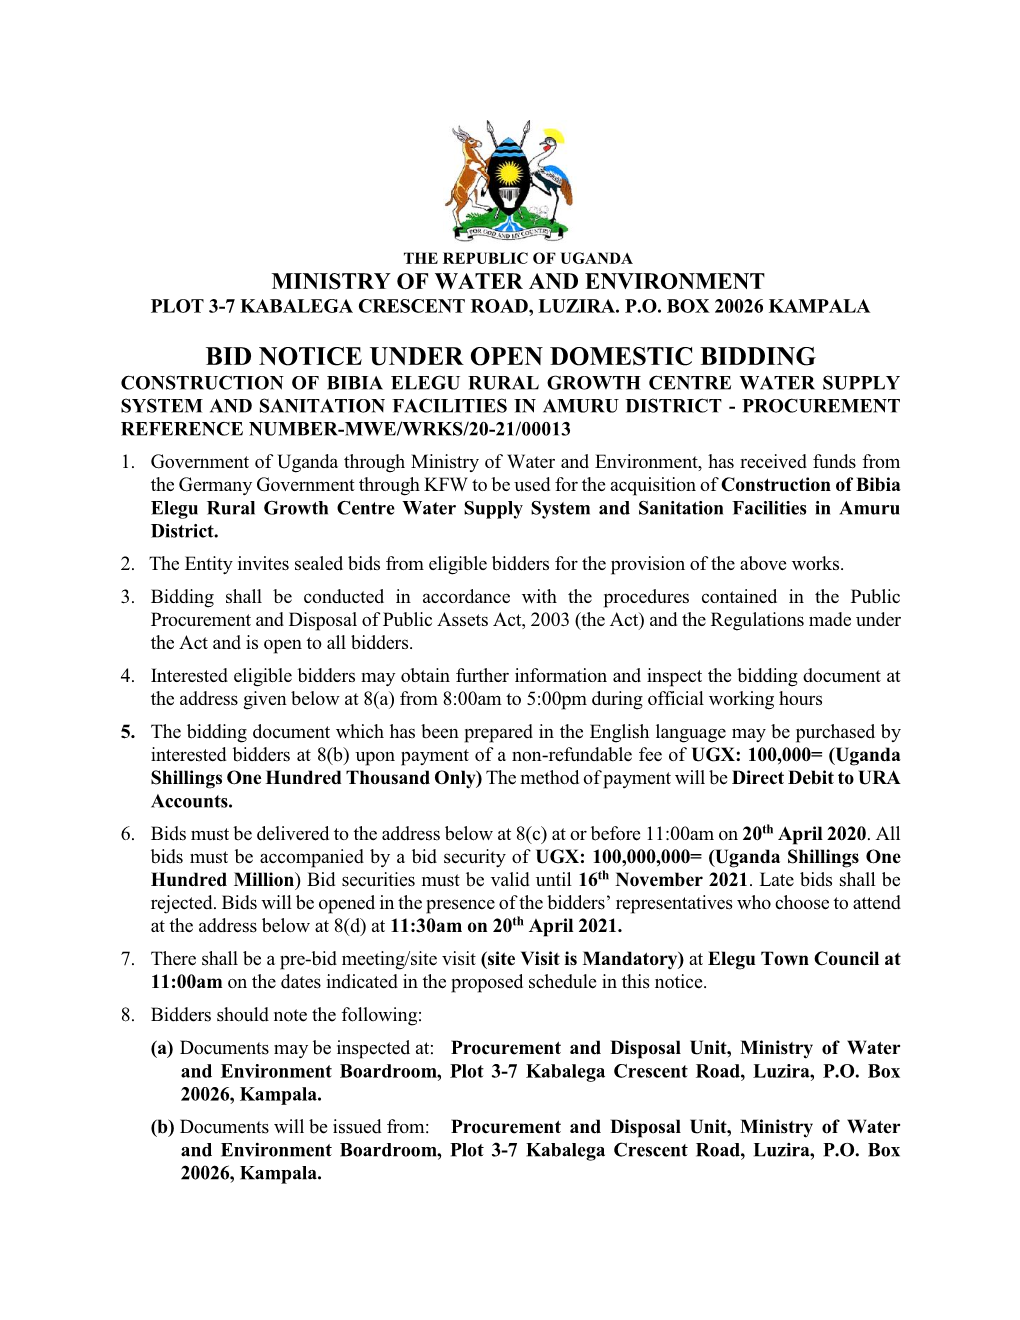 Bid Notice Under Open Domestic Bidding